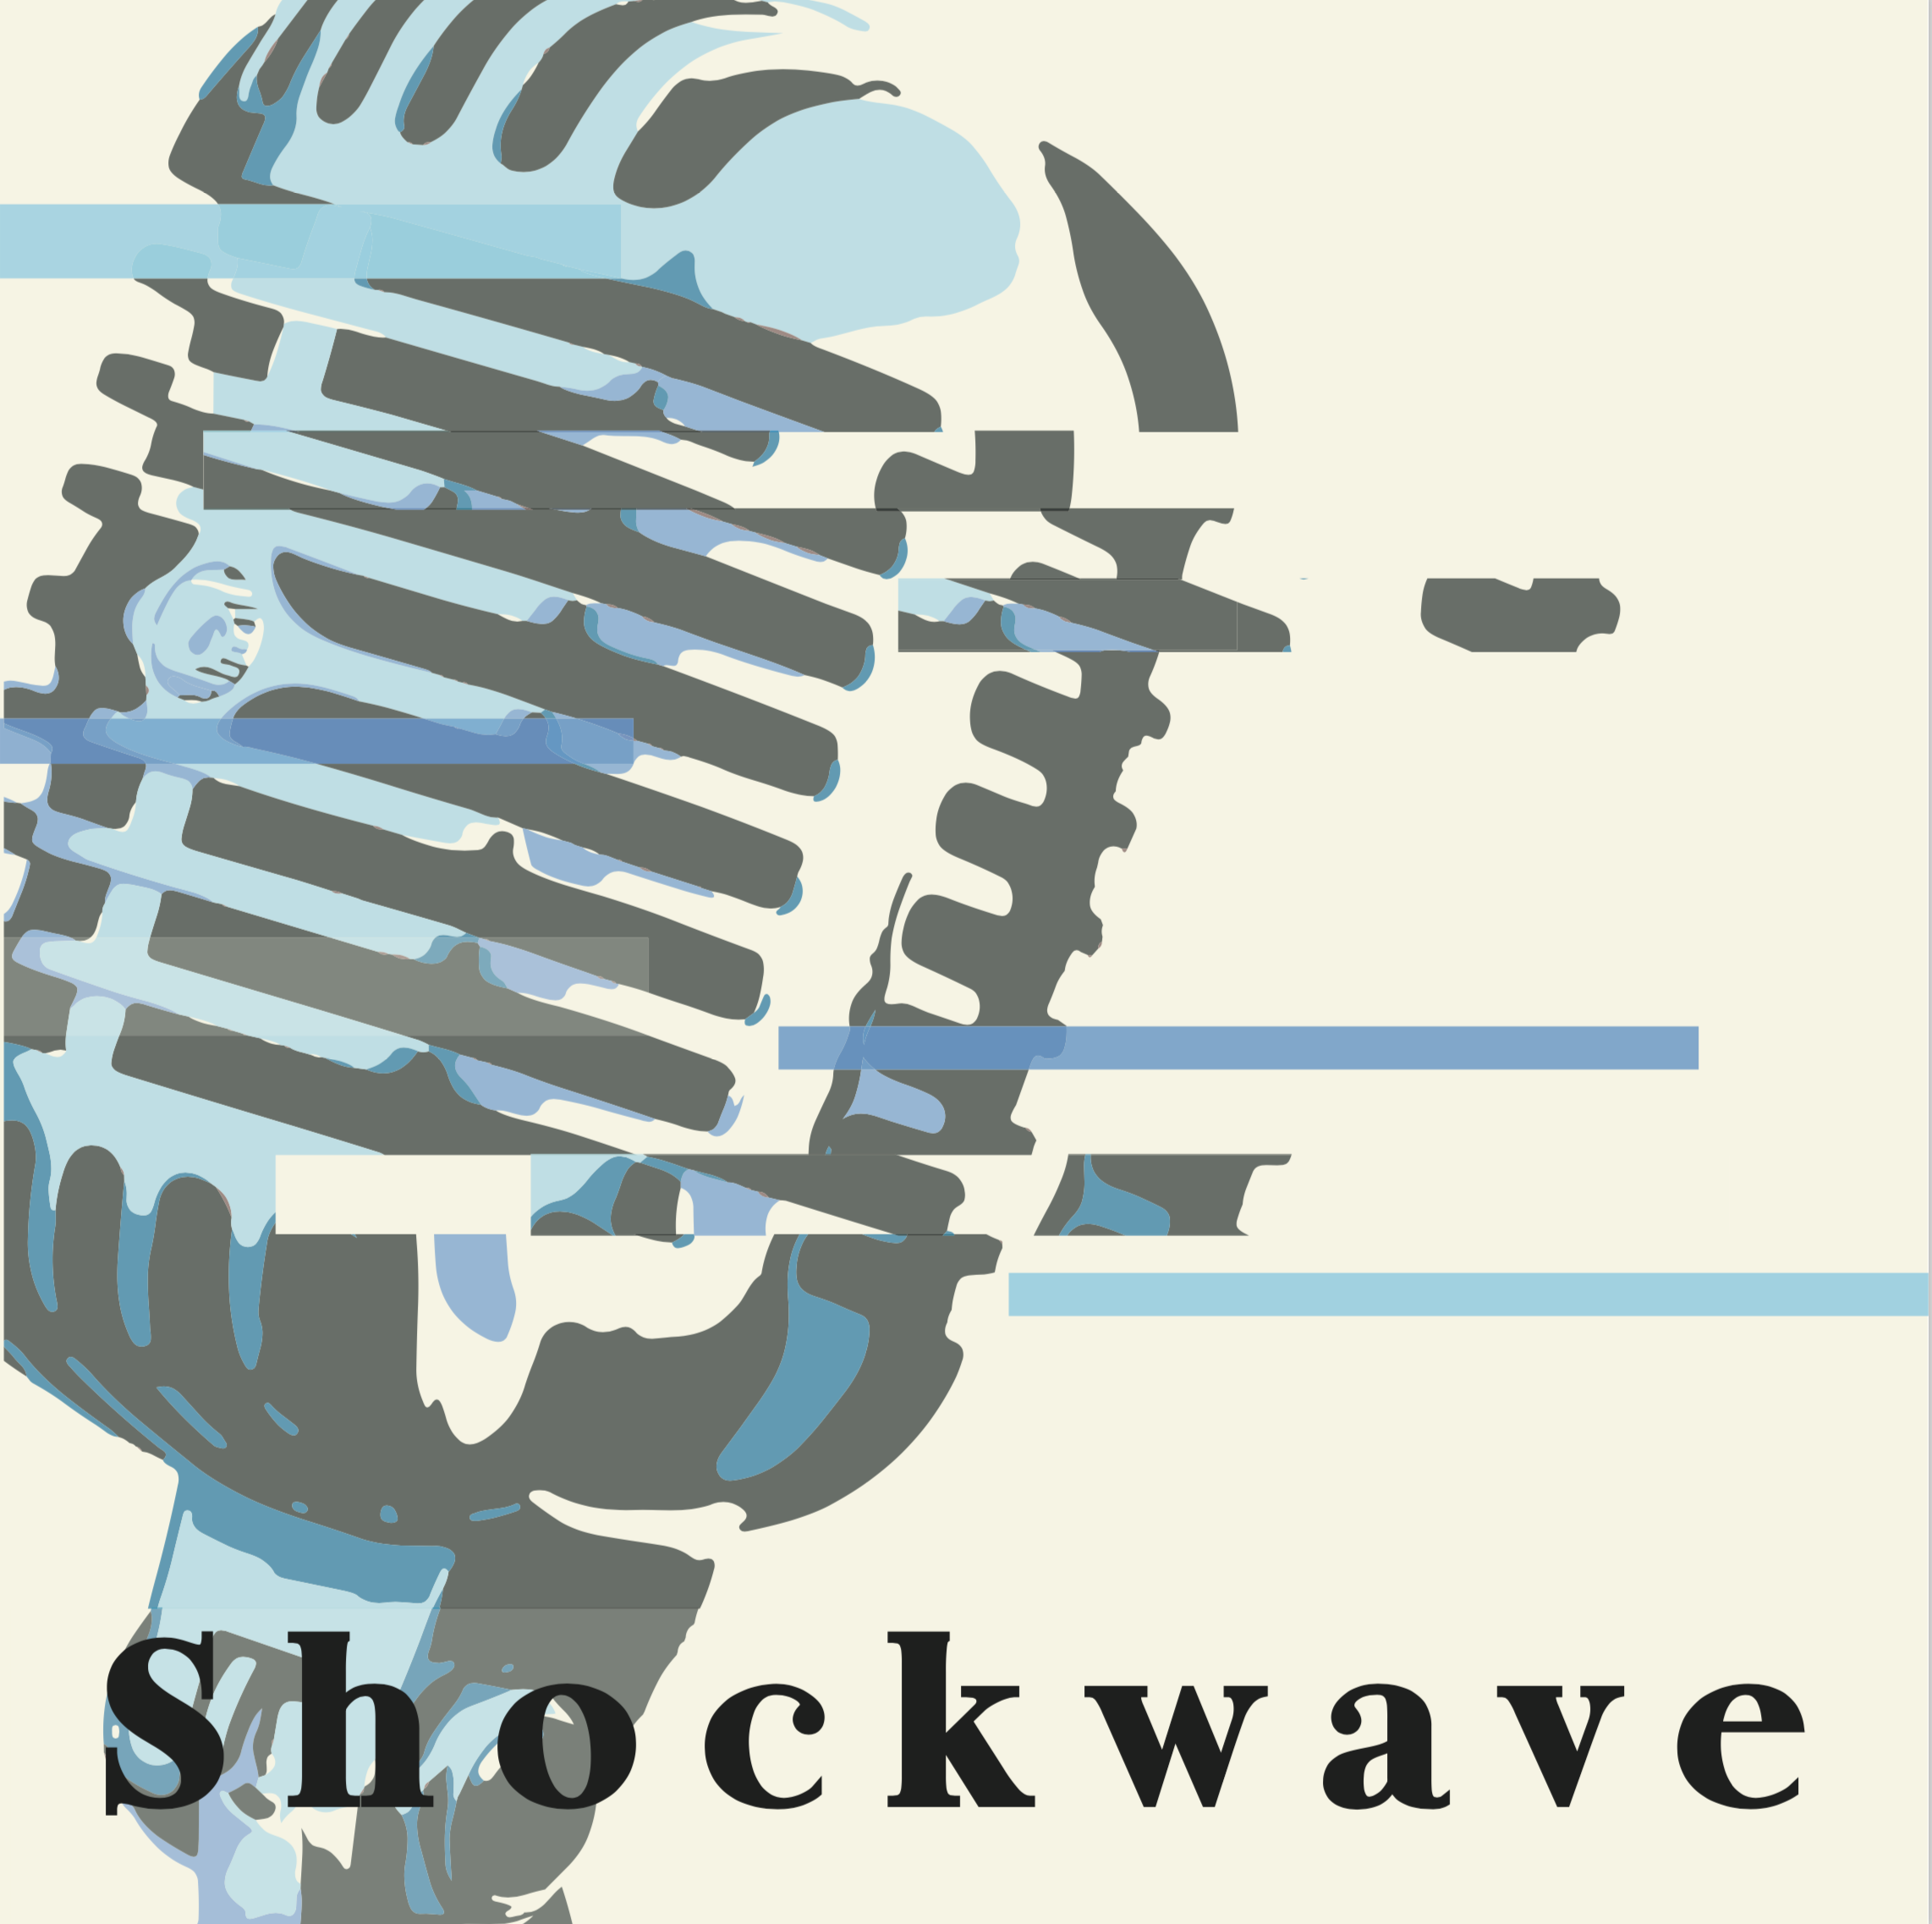 The Shockwave Podcast